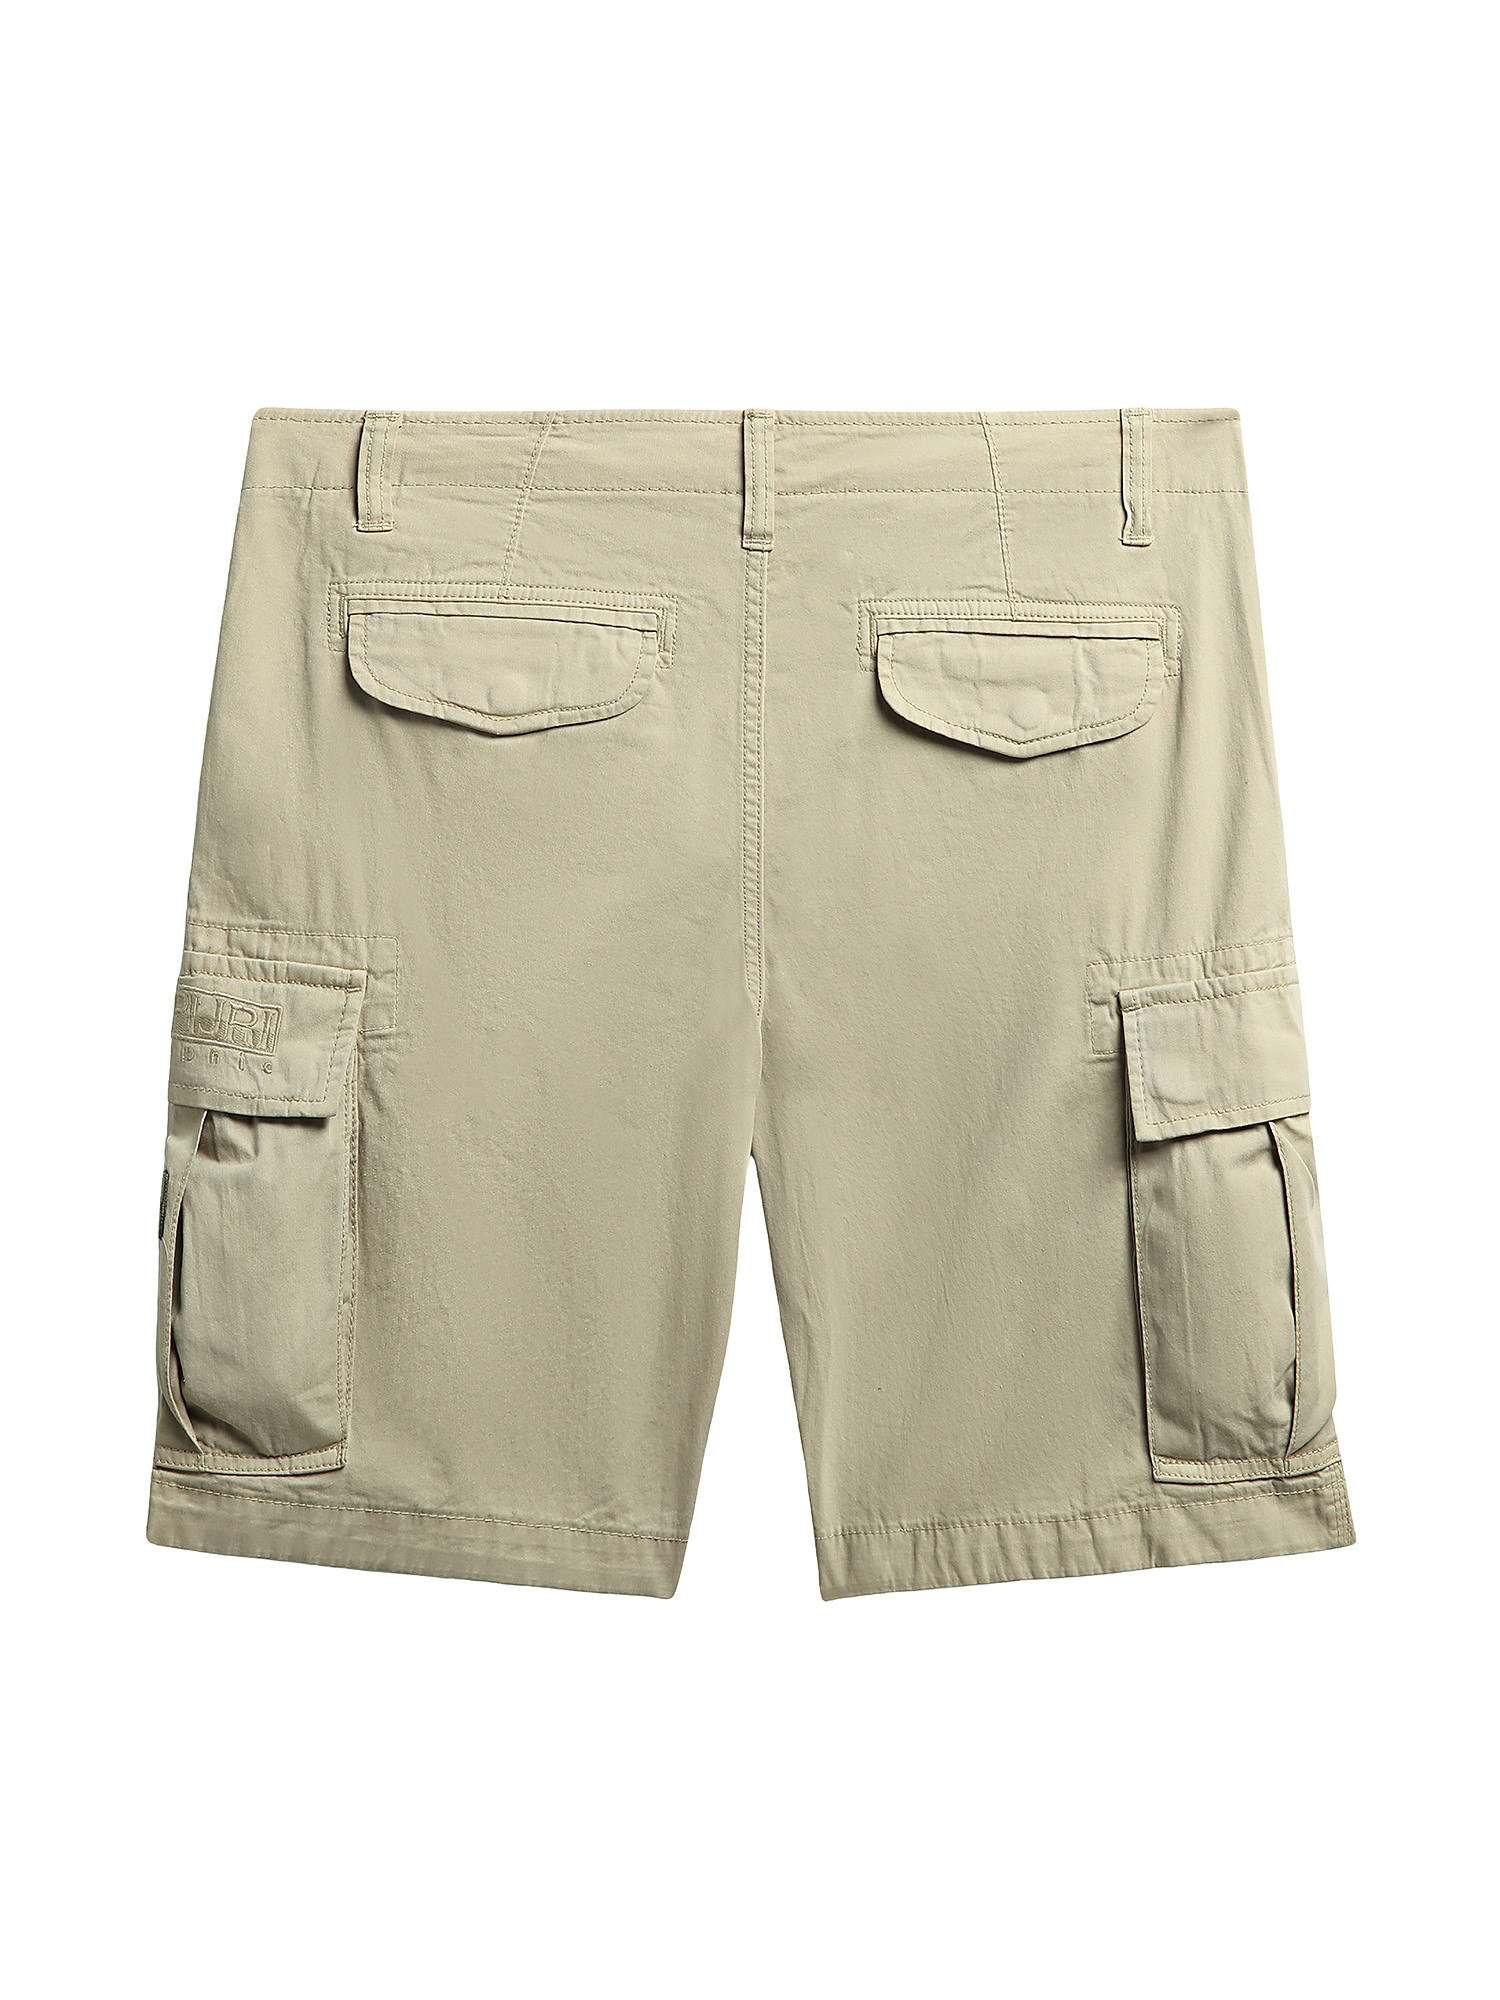 Bermuda Shorts Nus, Beige, large image number 1